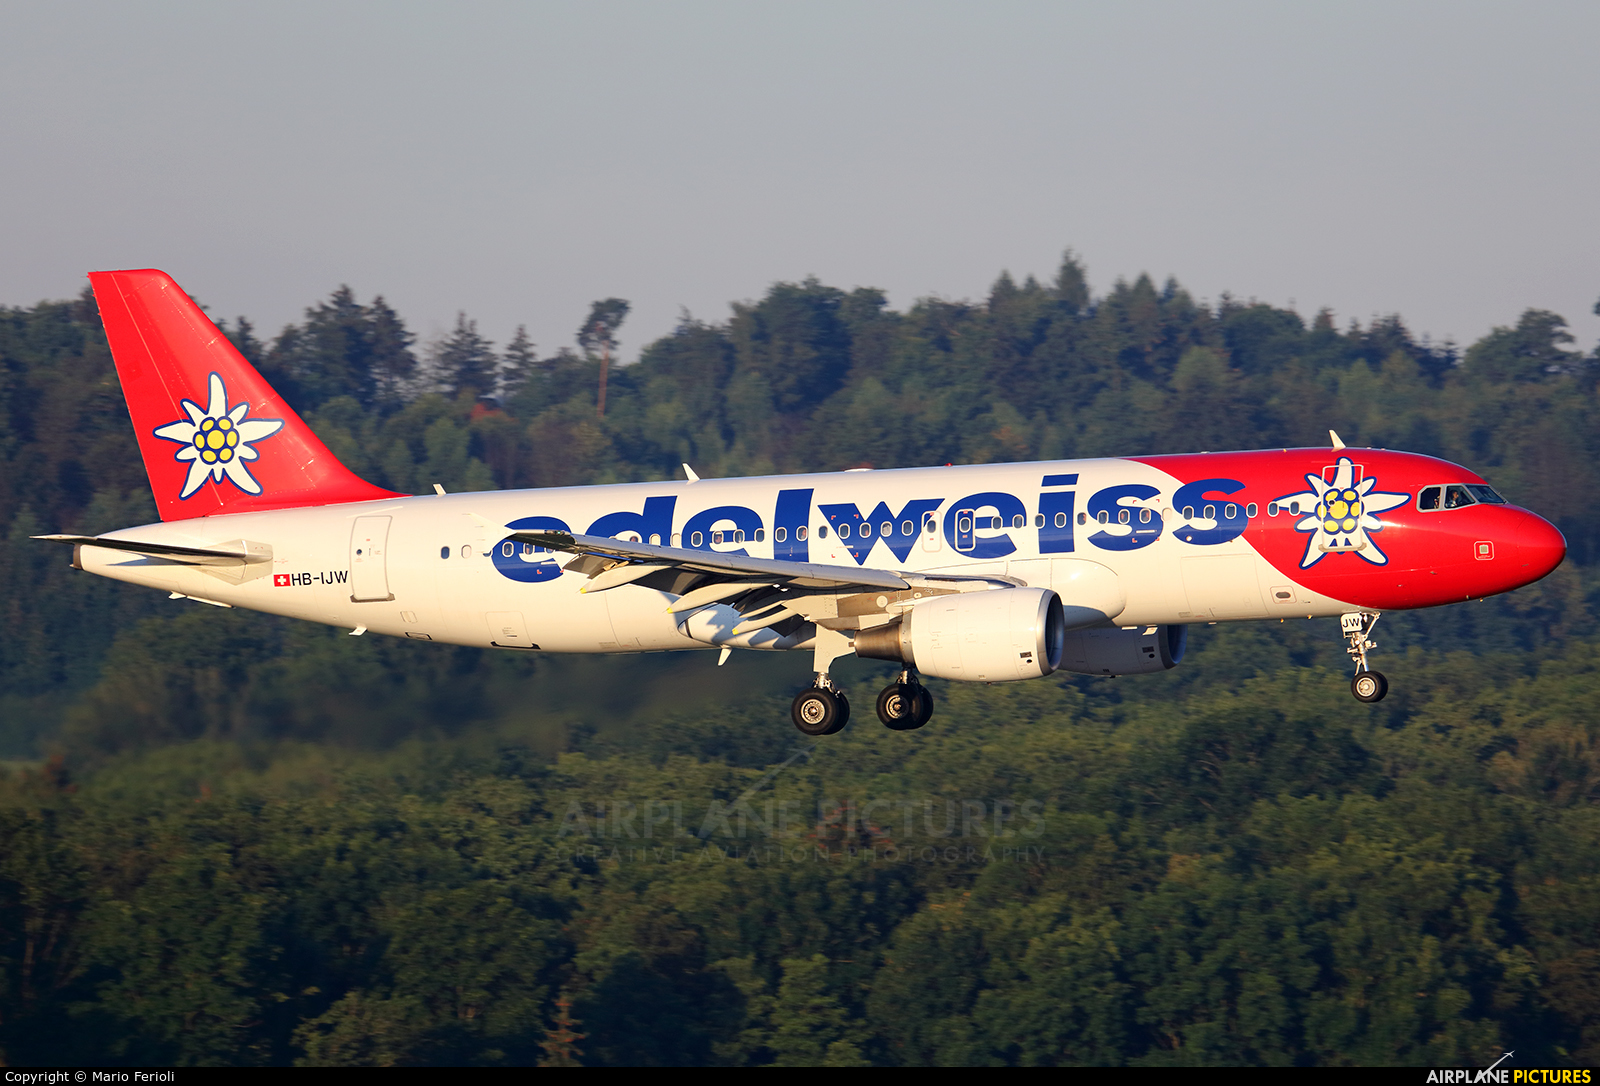 Edelweiss HB-IJV aircraft at Zurich